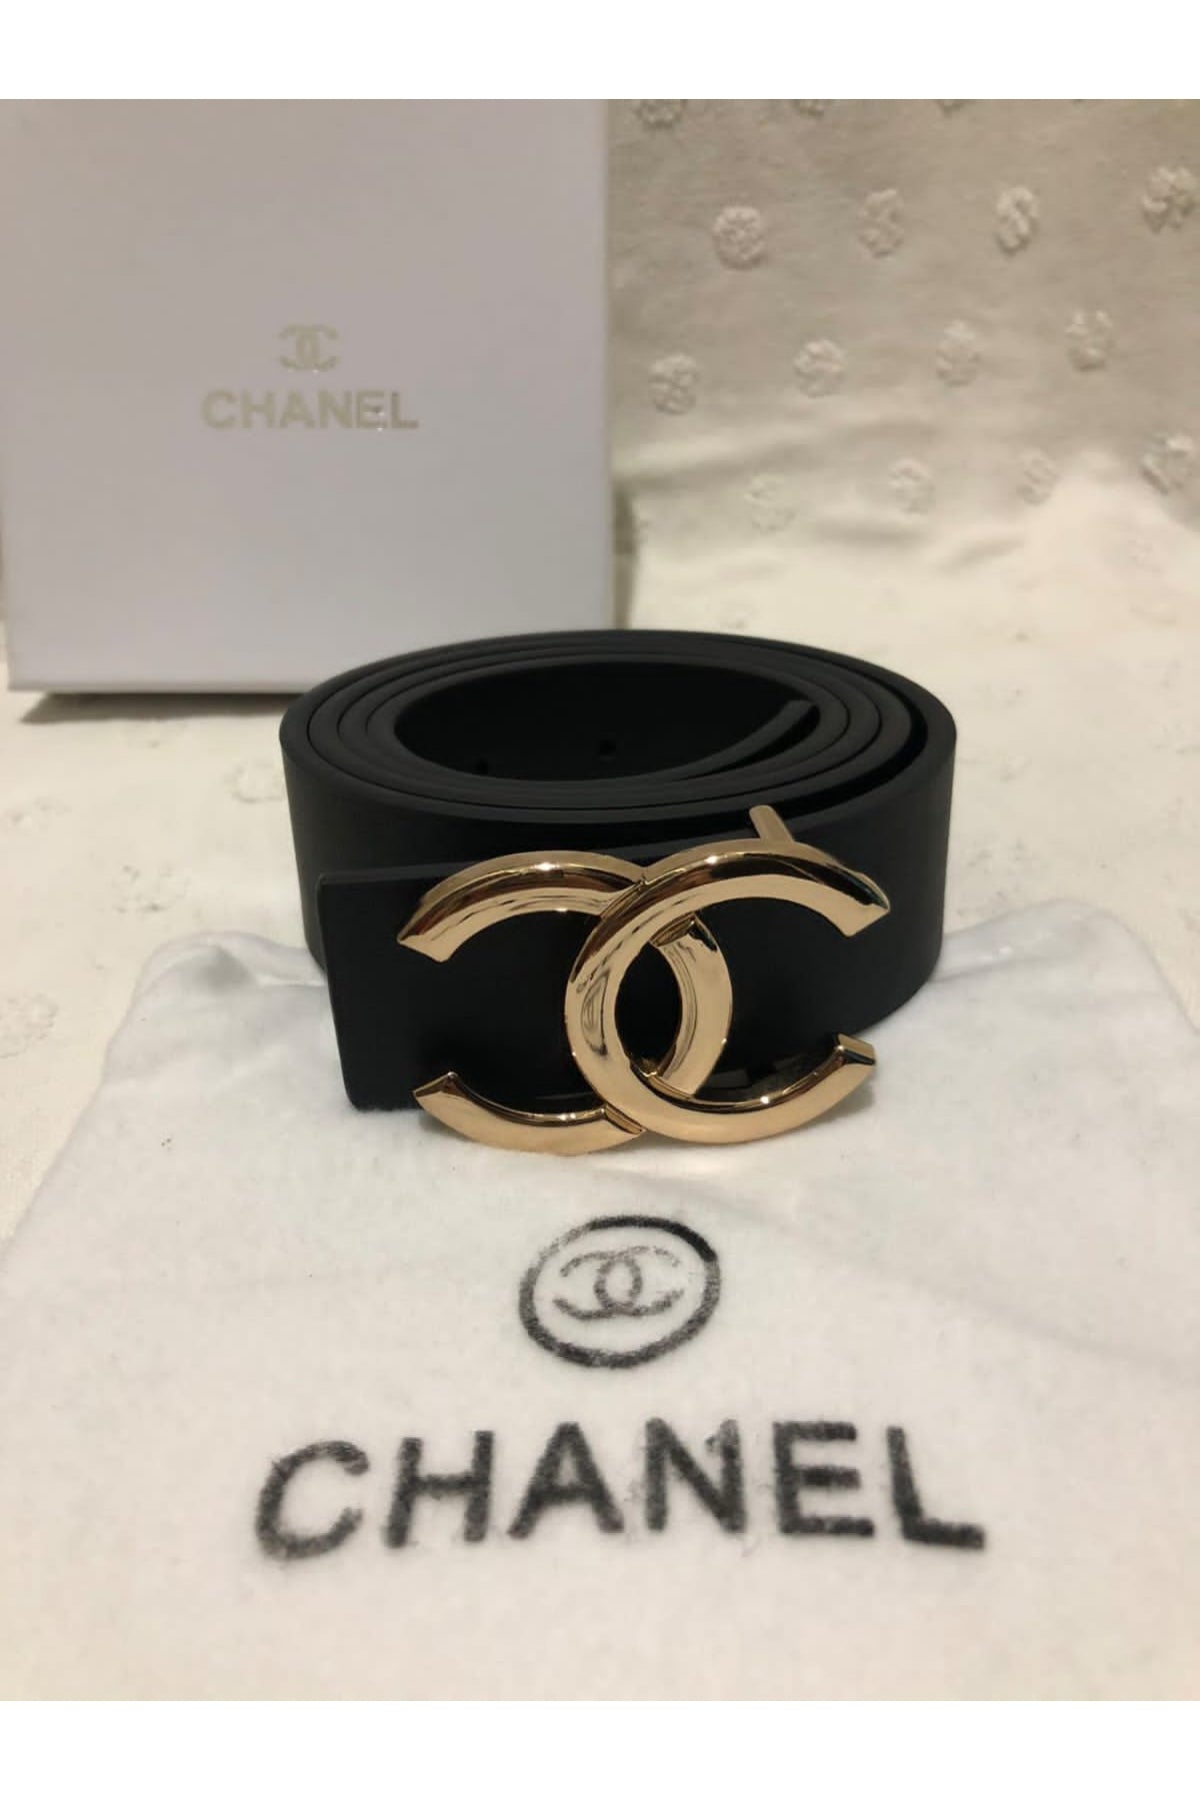 CHANEL - Orignal Leather Belt - UAE